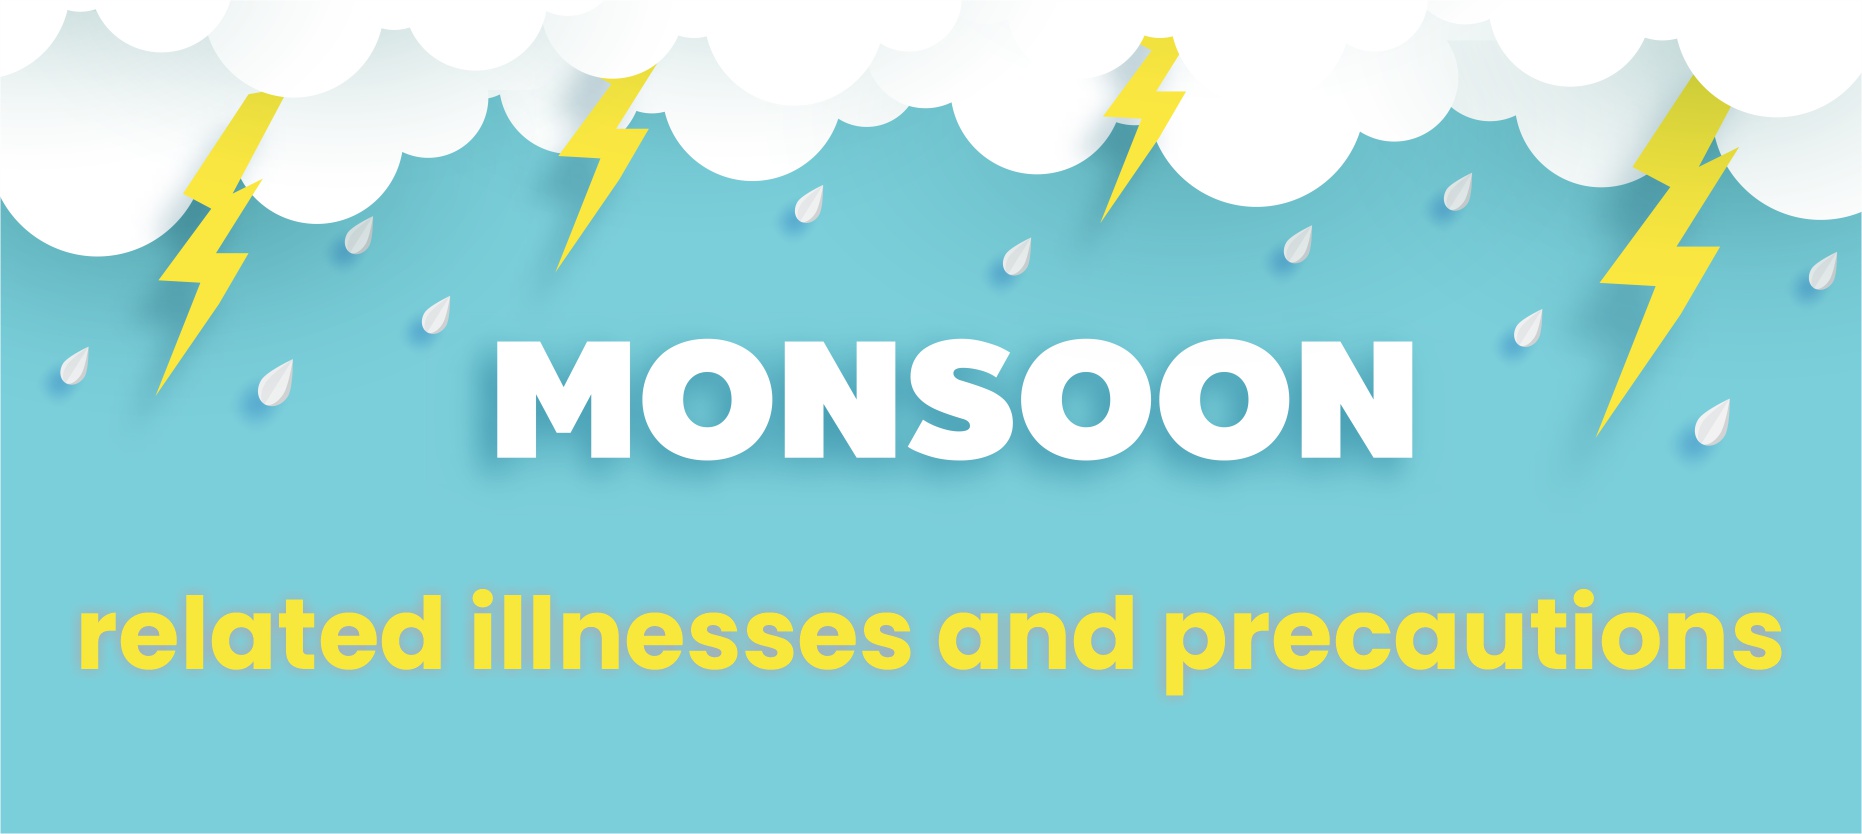 Monsoon related illnesses